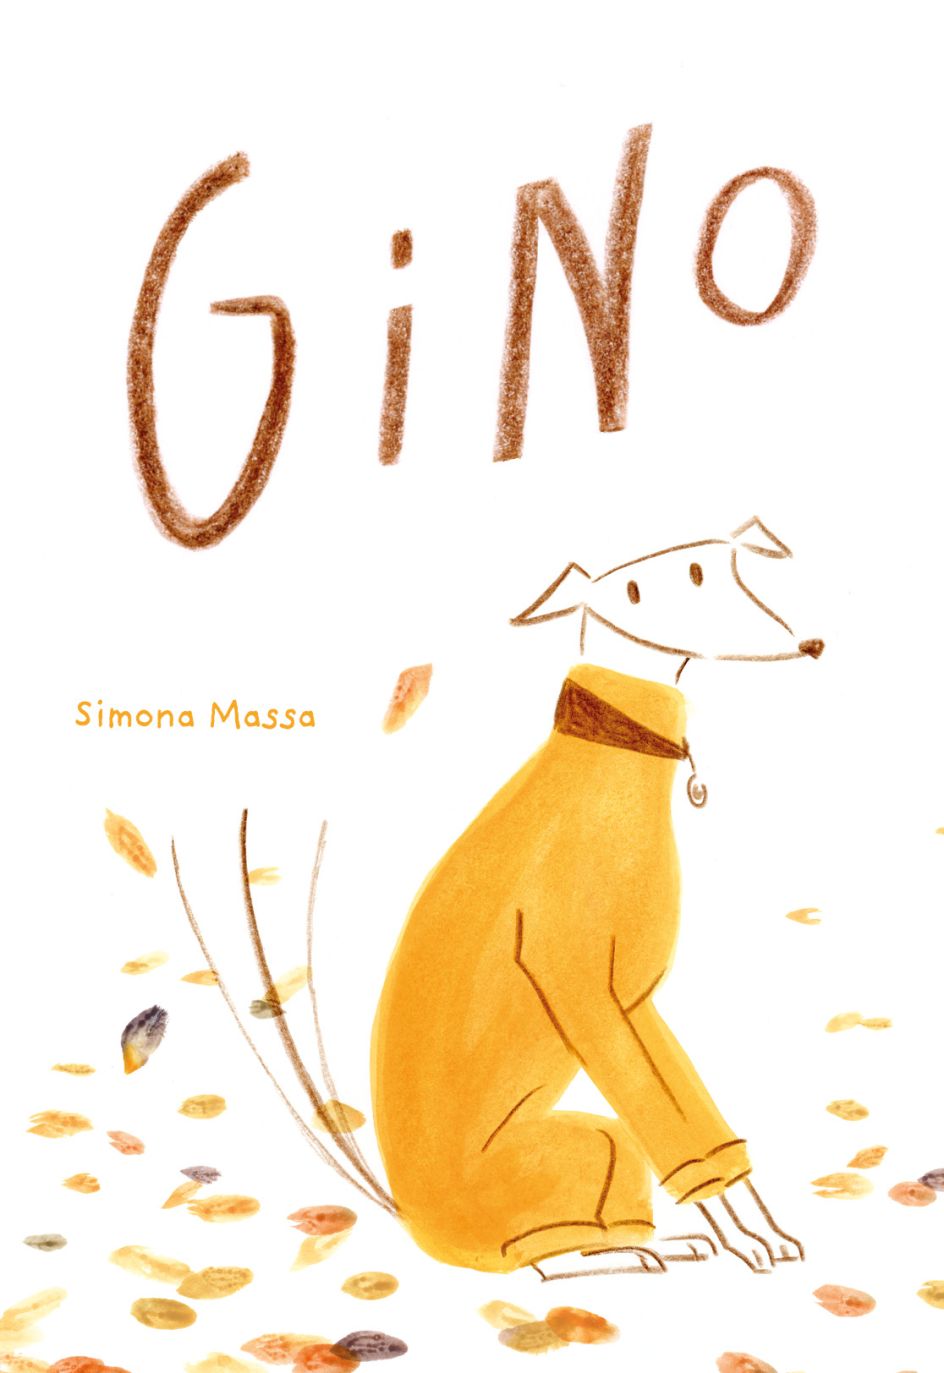 New Talent Children's Publishing Category Winner: Gino by Simona Massa